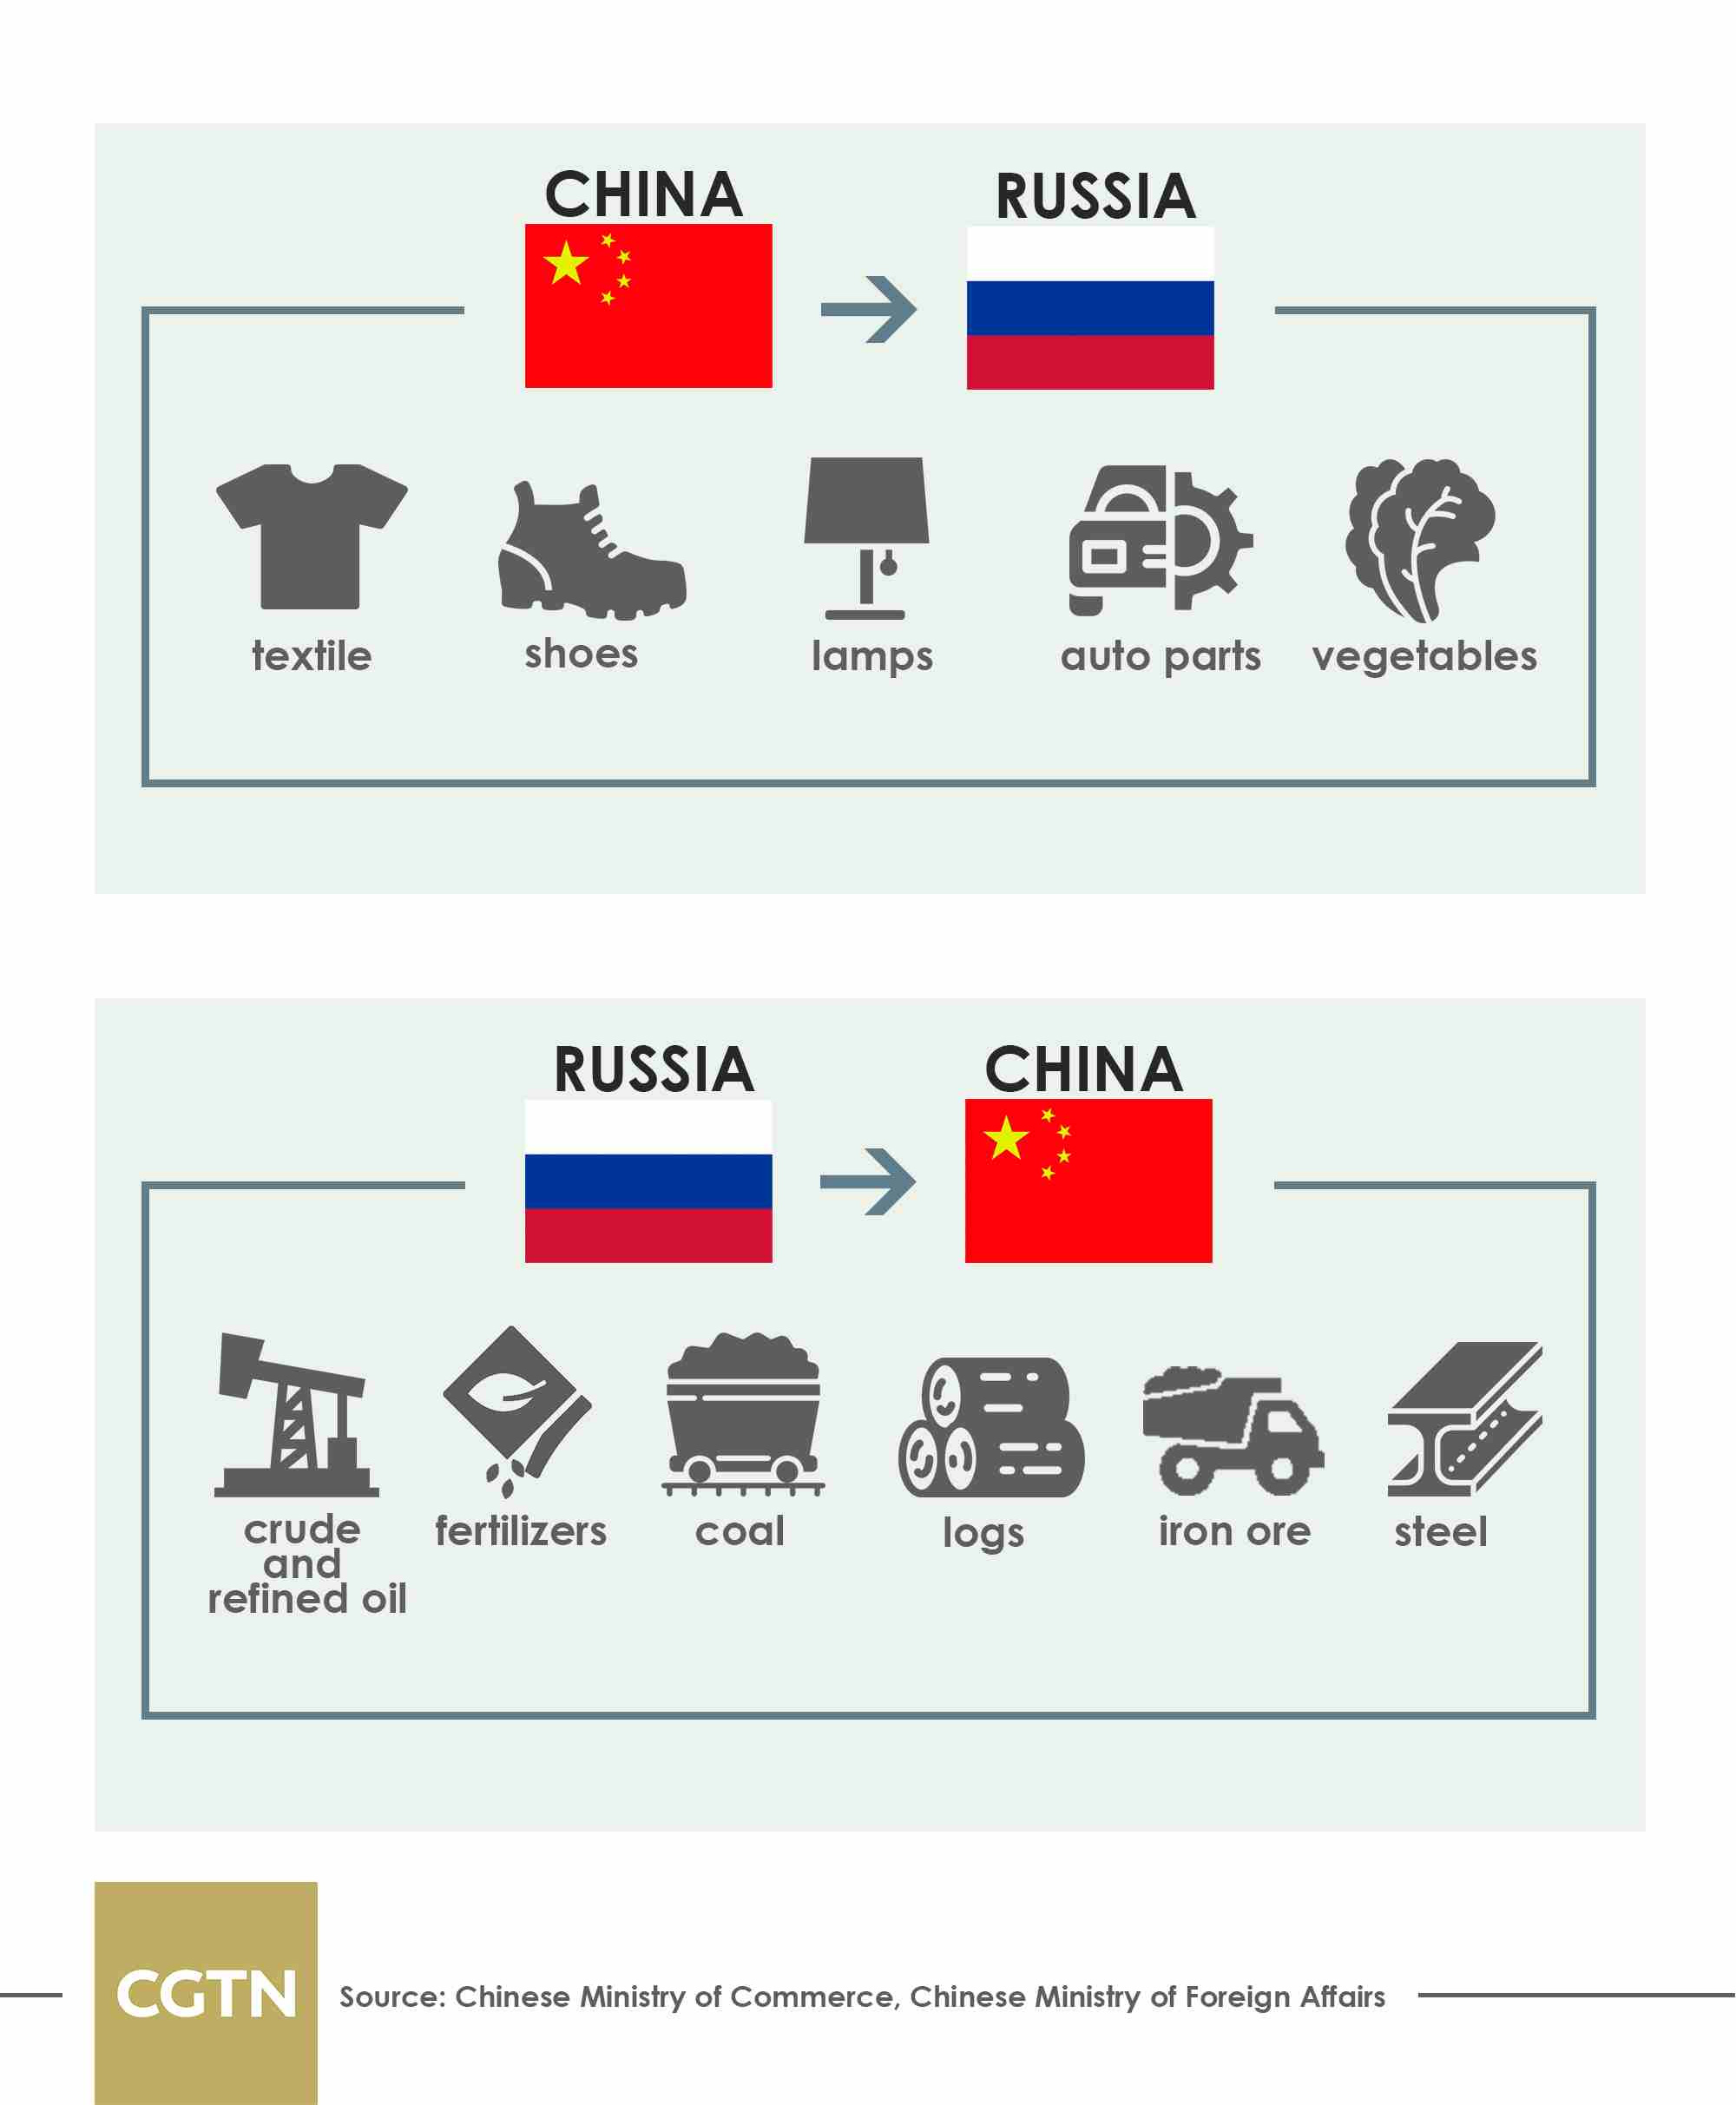 ChinaRussia trade relations unleash fresh vitality in a new era CGTN